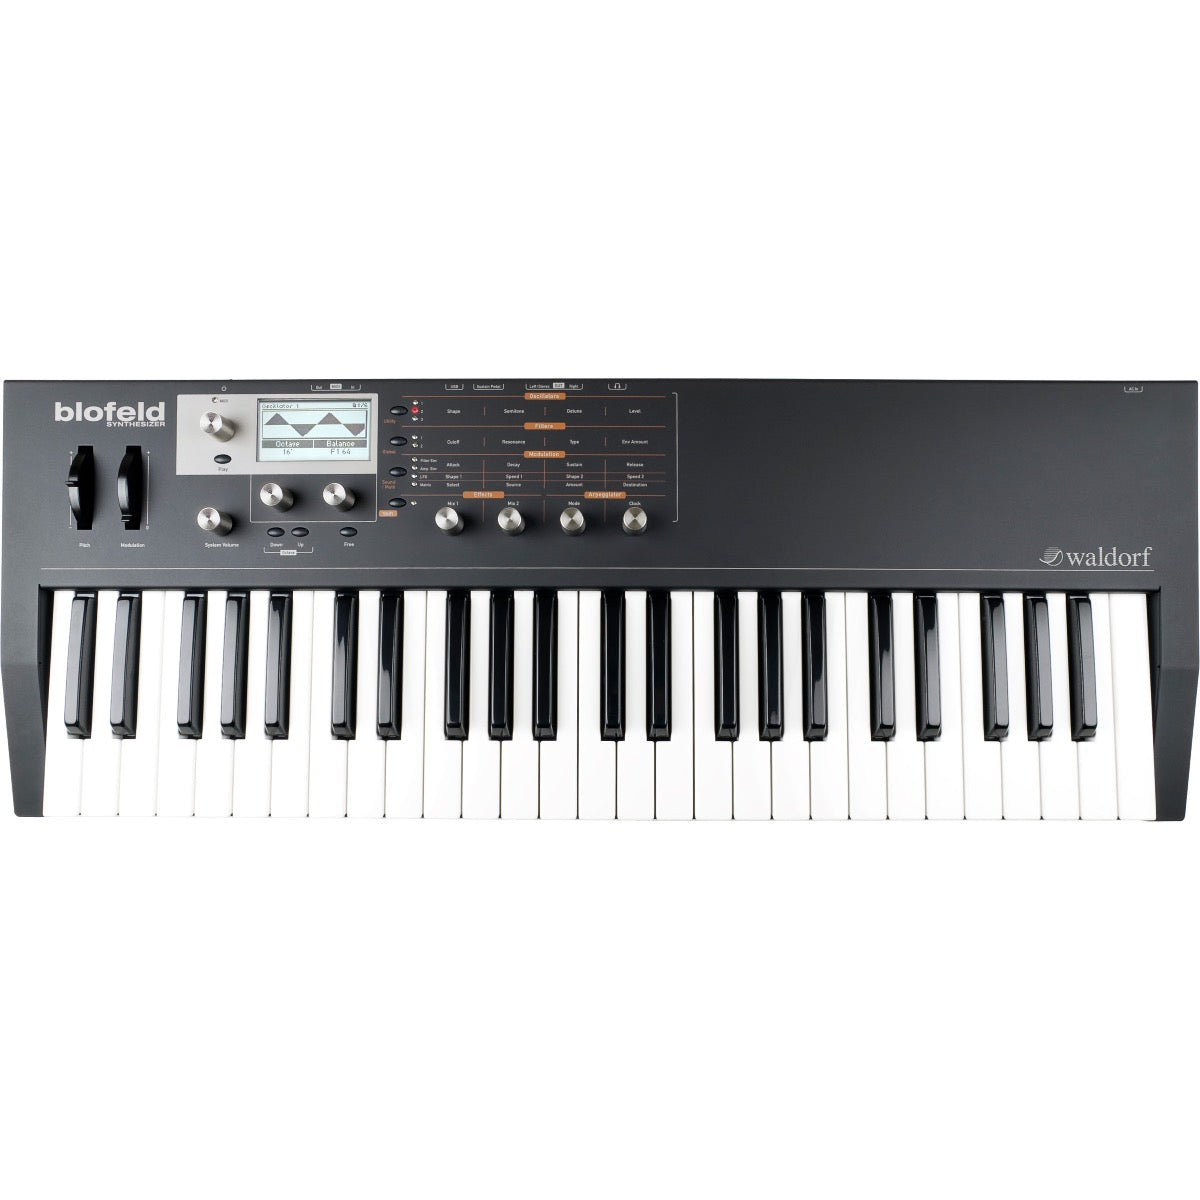 Waldorf Blofeld Keyboard Synthesizer - Black / Shadow Edition View 1